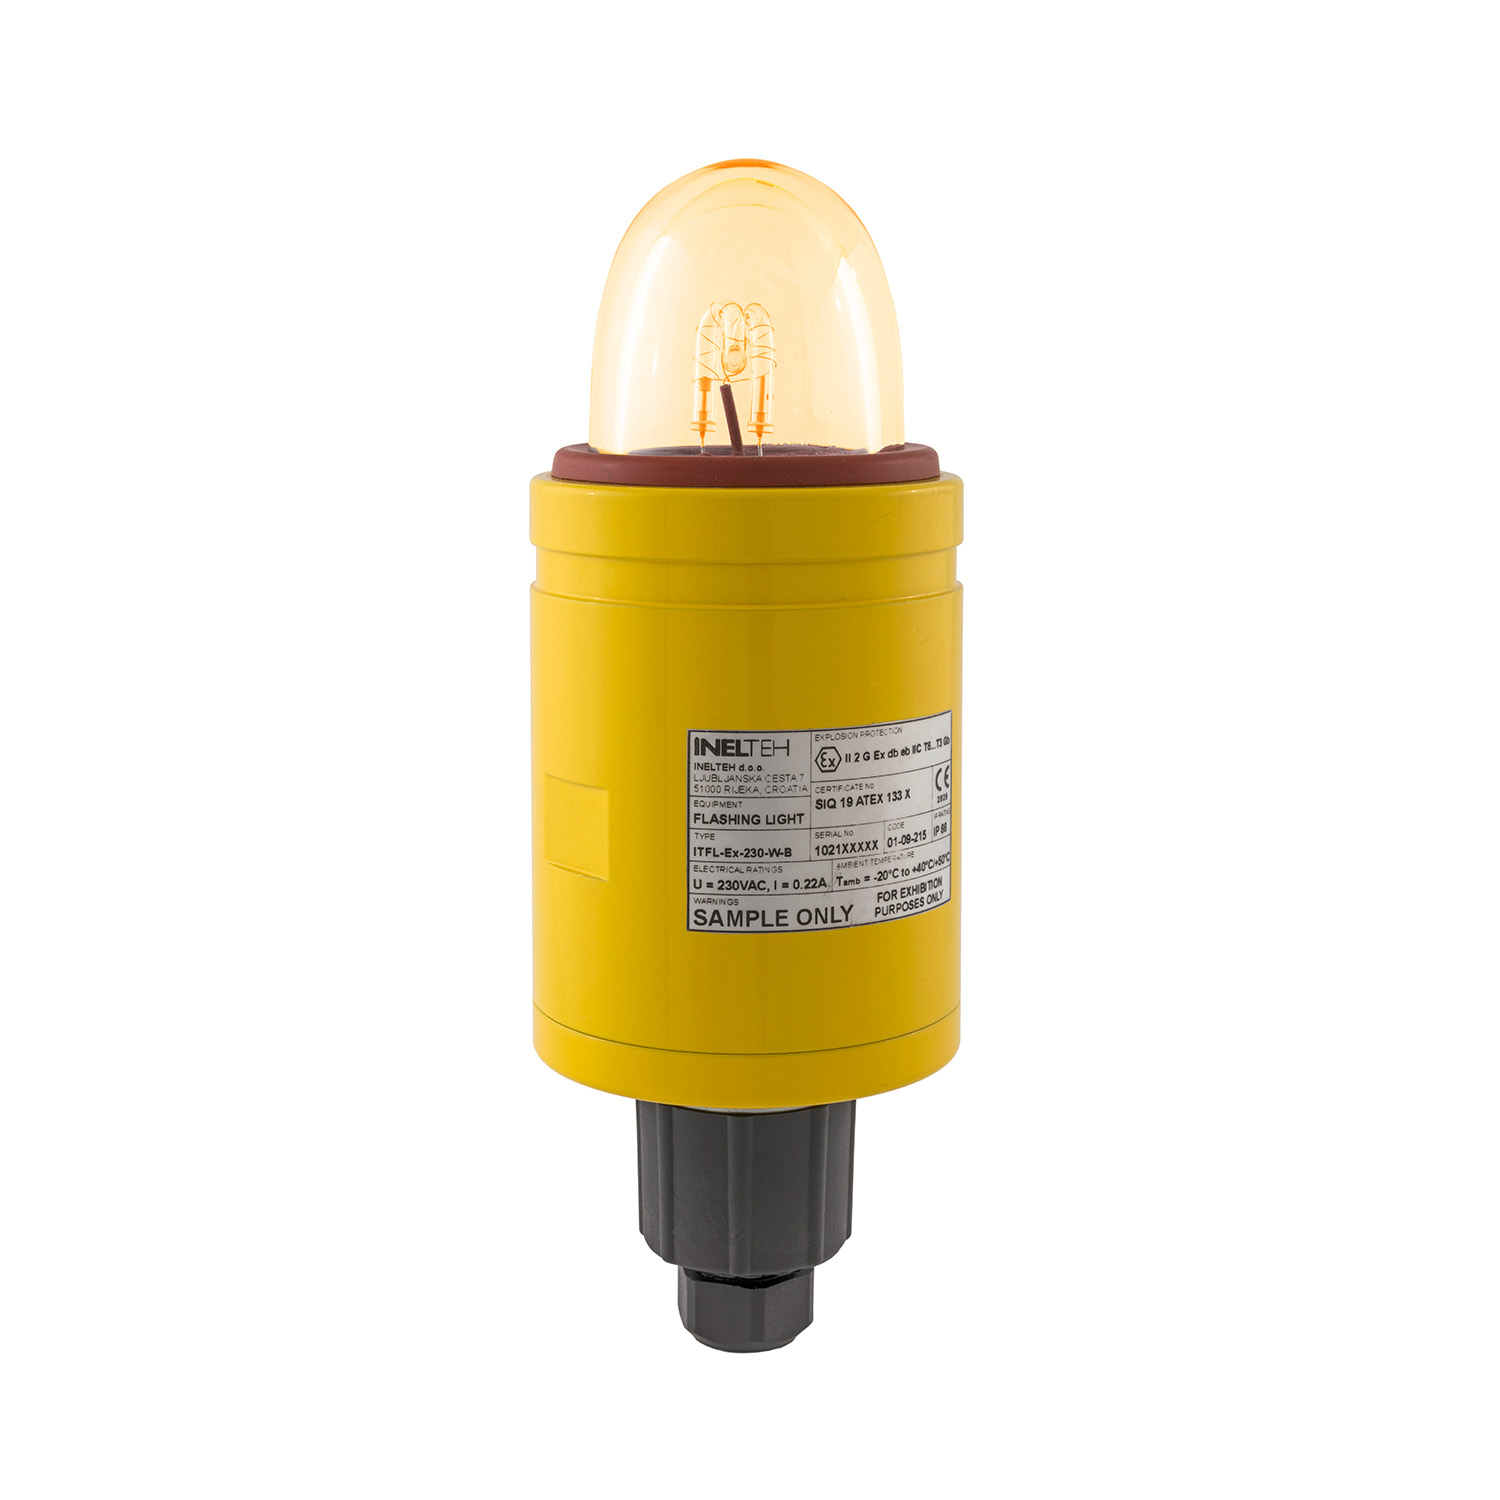 01-09-203 ITFL-EX-230-A-B, Ex flashing light 230V AC, Amber, with Exd/Exe adapter